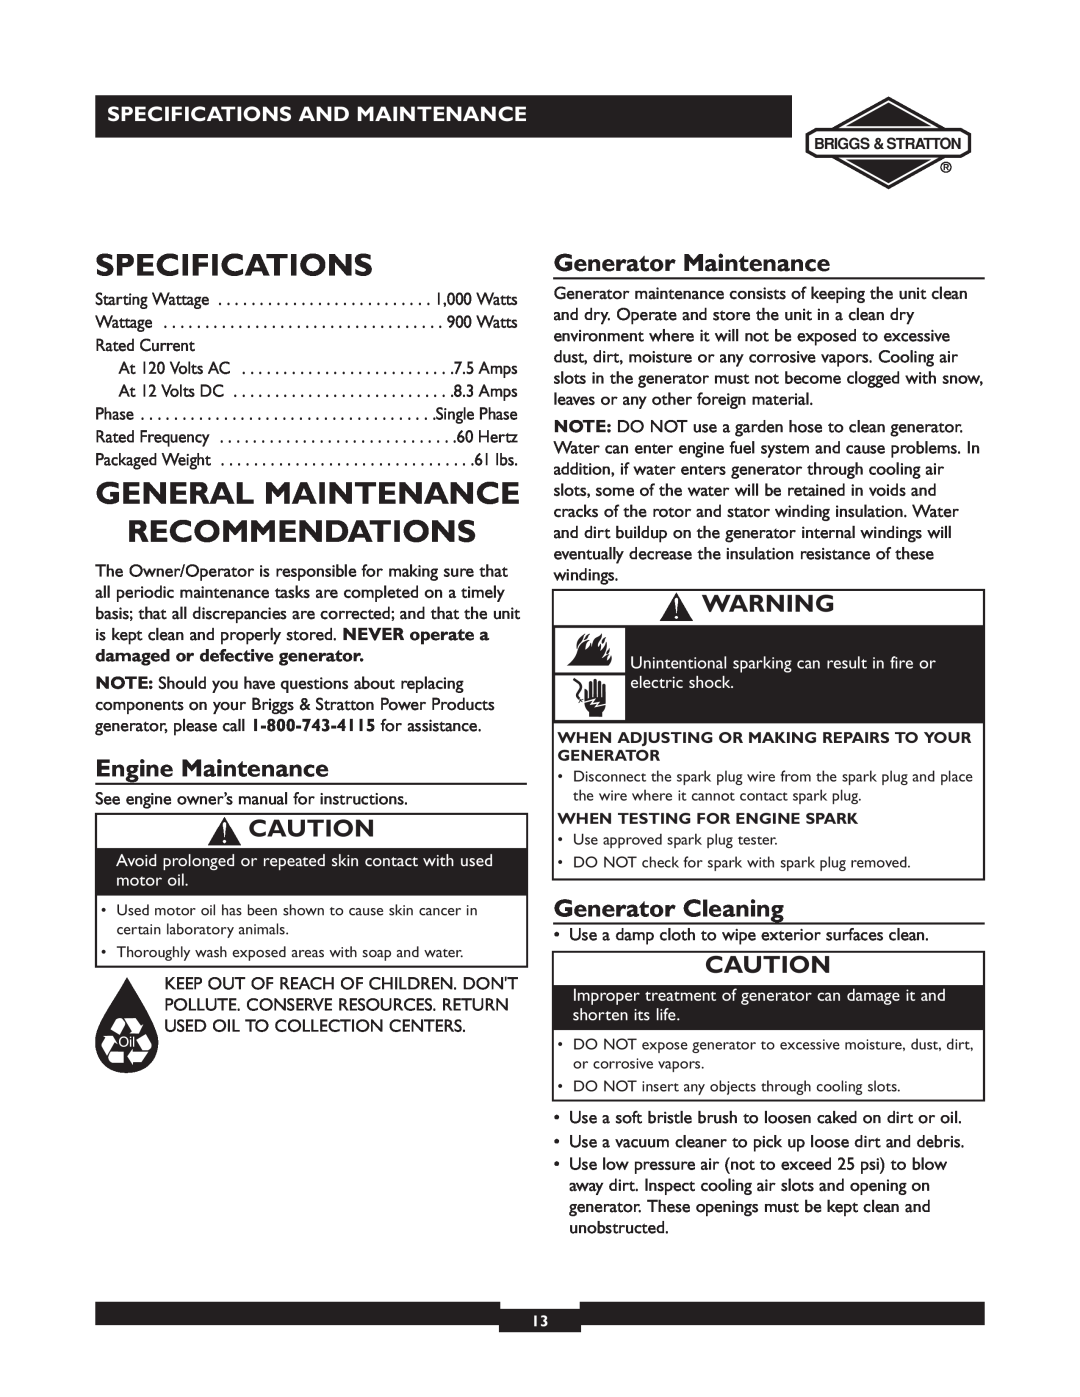 Briggs & Stratton 01532-4 Specifications, General Maintenance Recommendations, Engine Maintenance, Generator Maintenance 